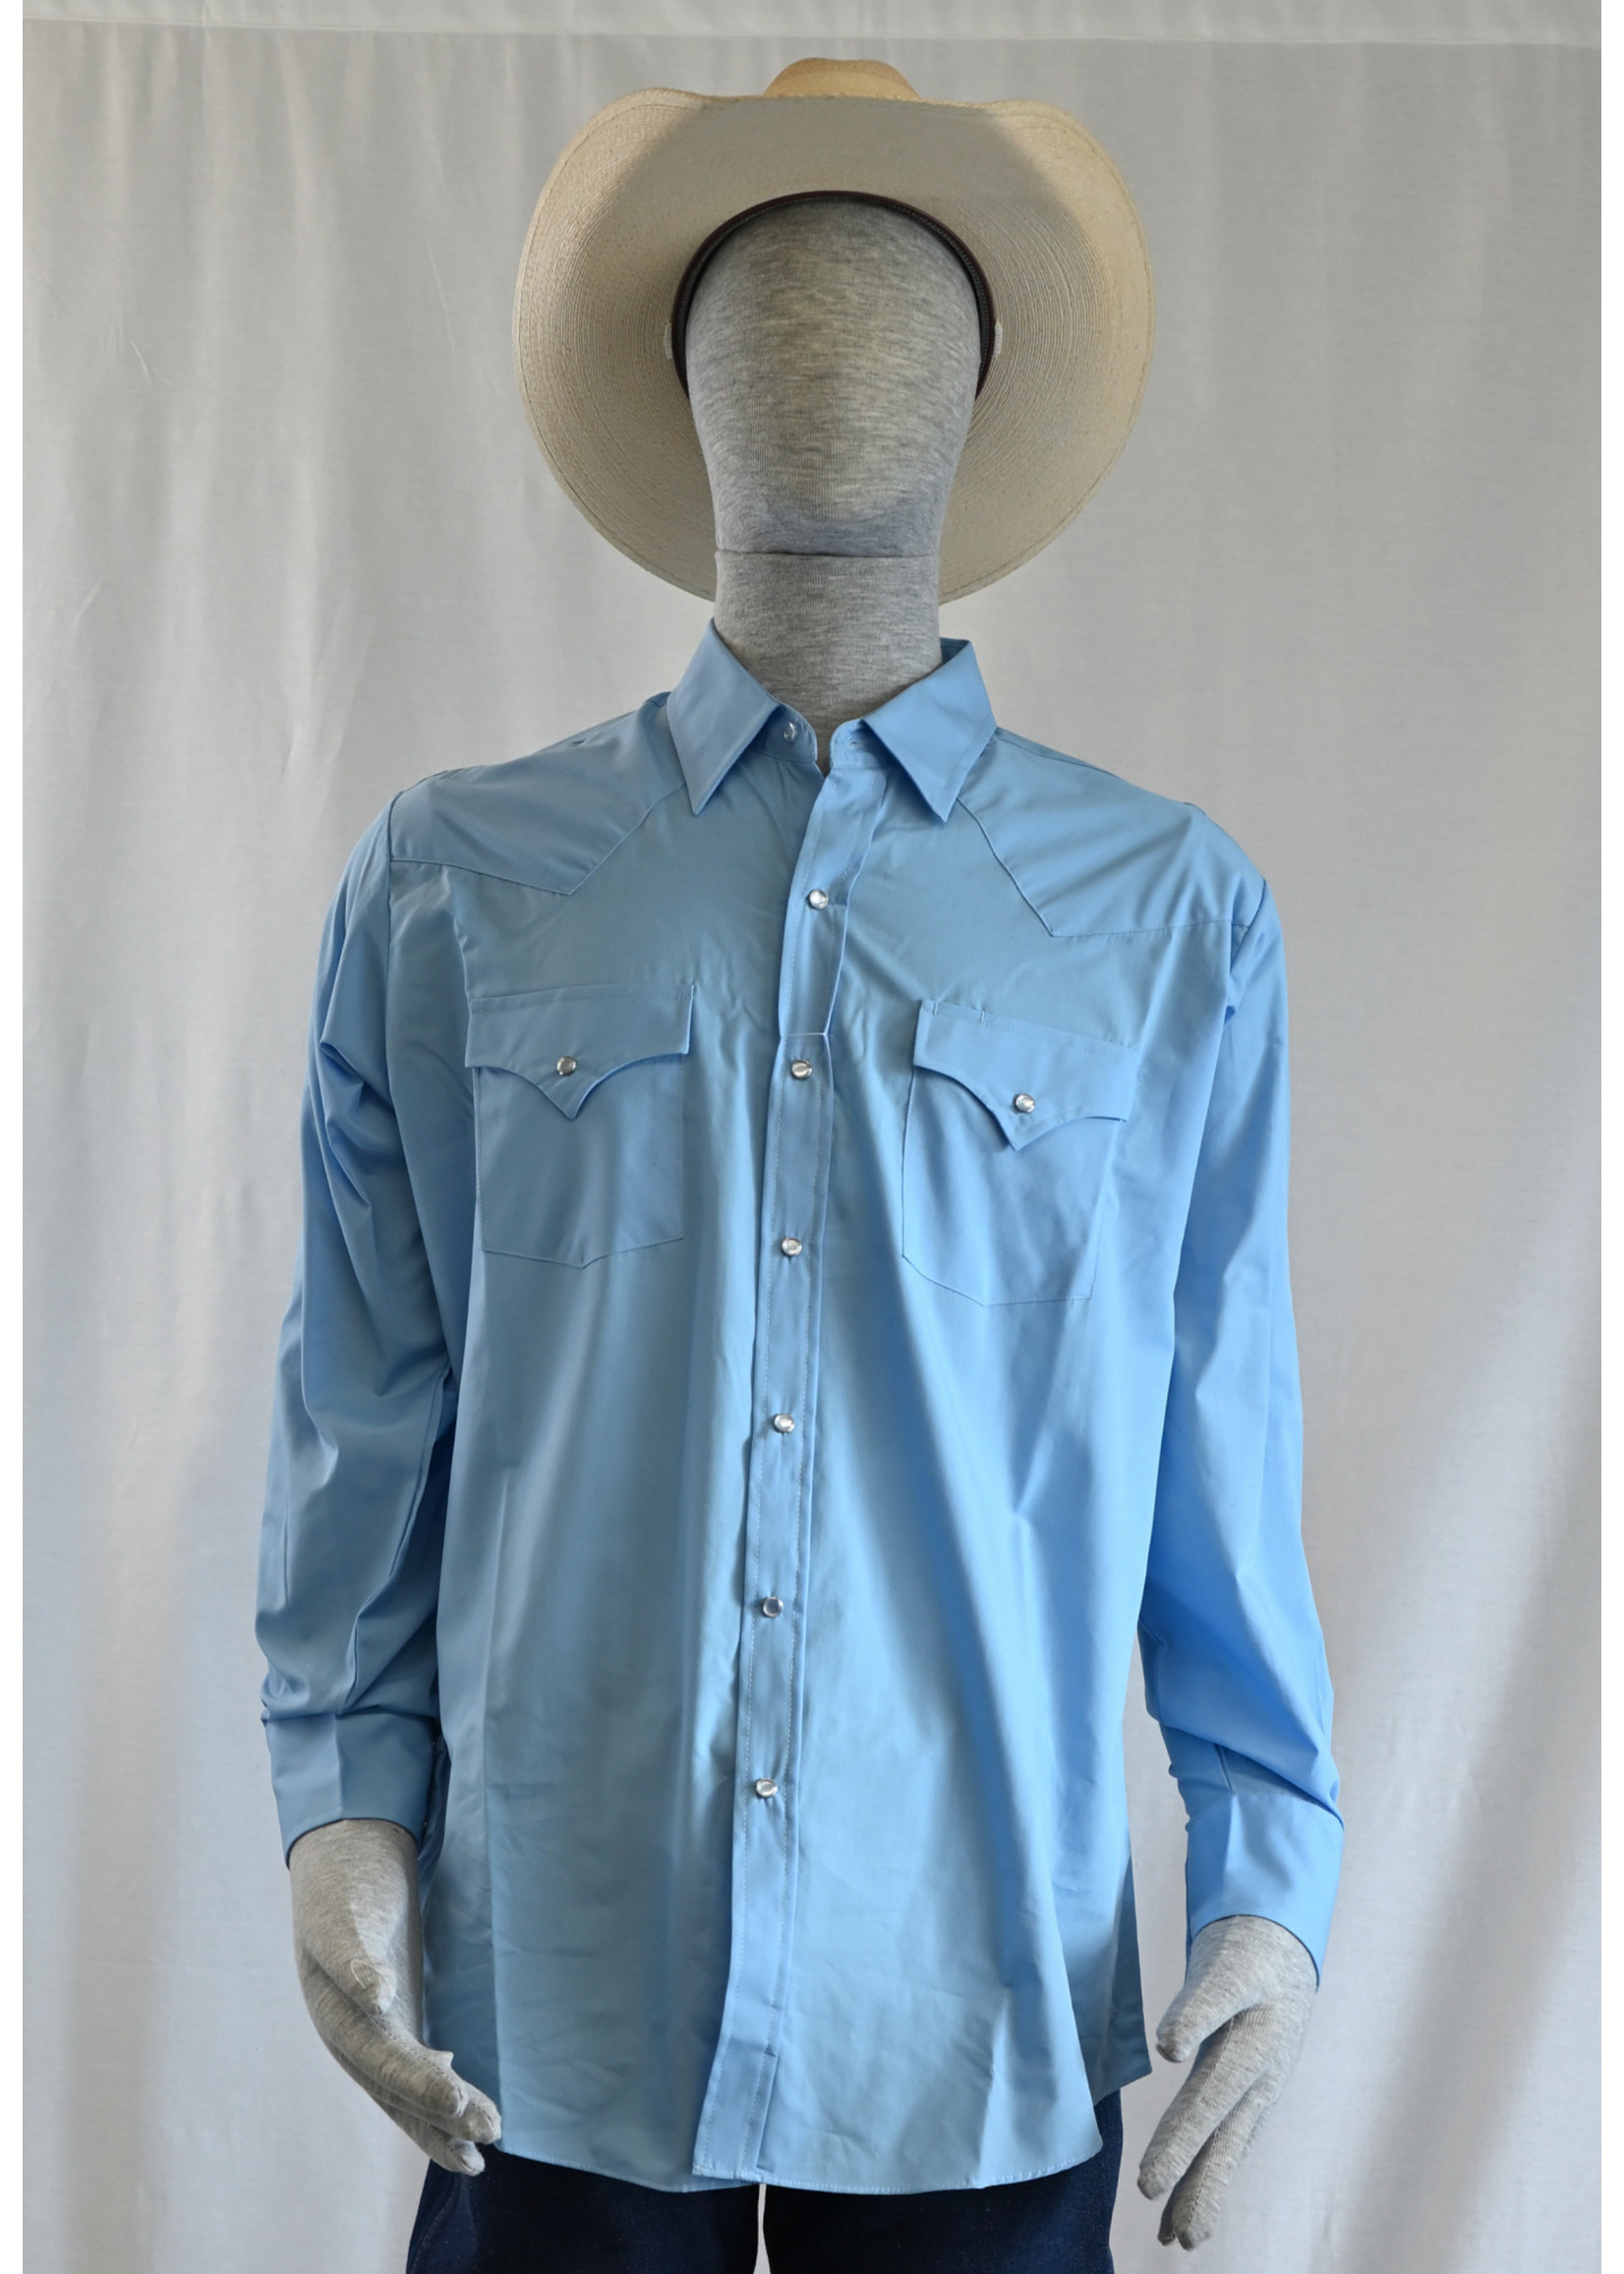 Ely 15201905 L.S. Powder Blue Shirt